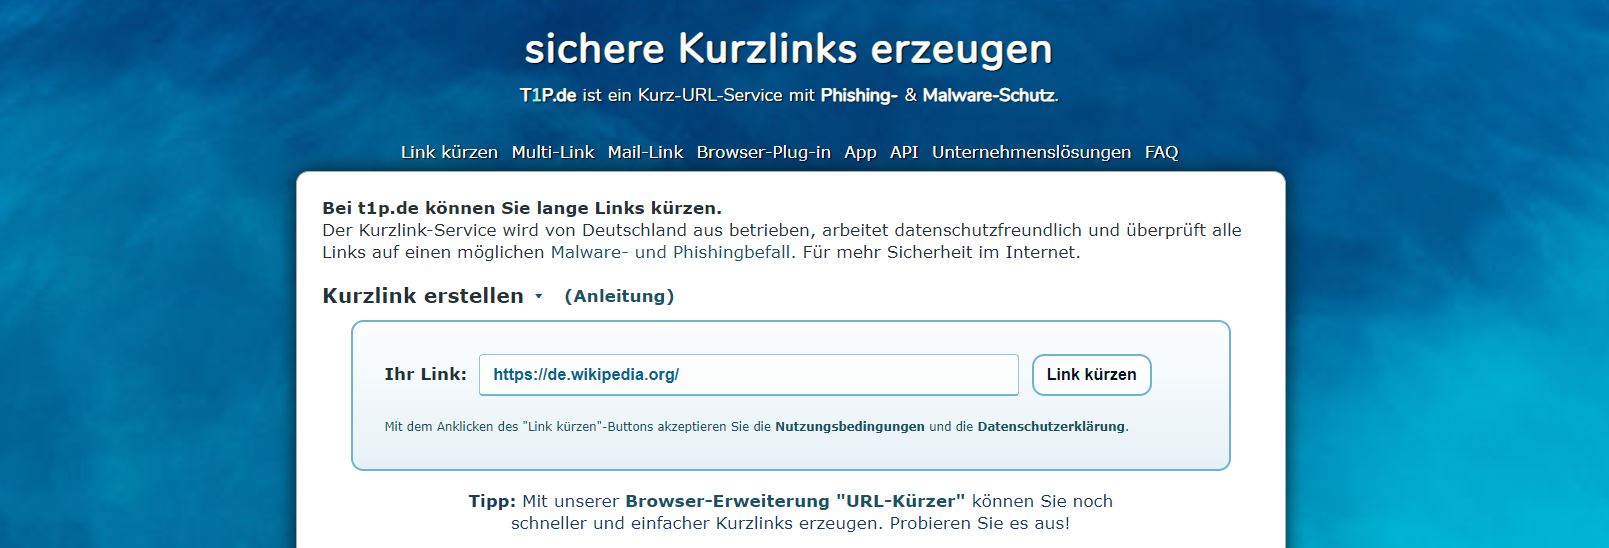 Marketingblog URL Shortener t1p.de